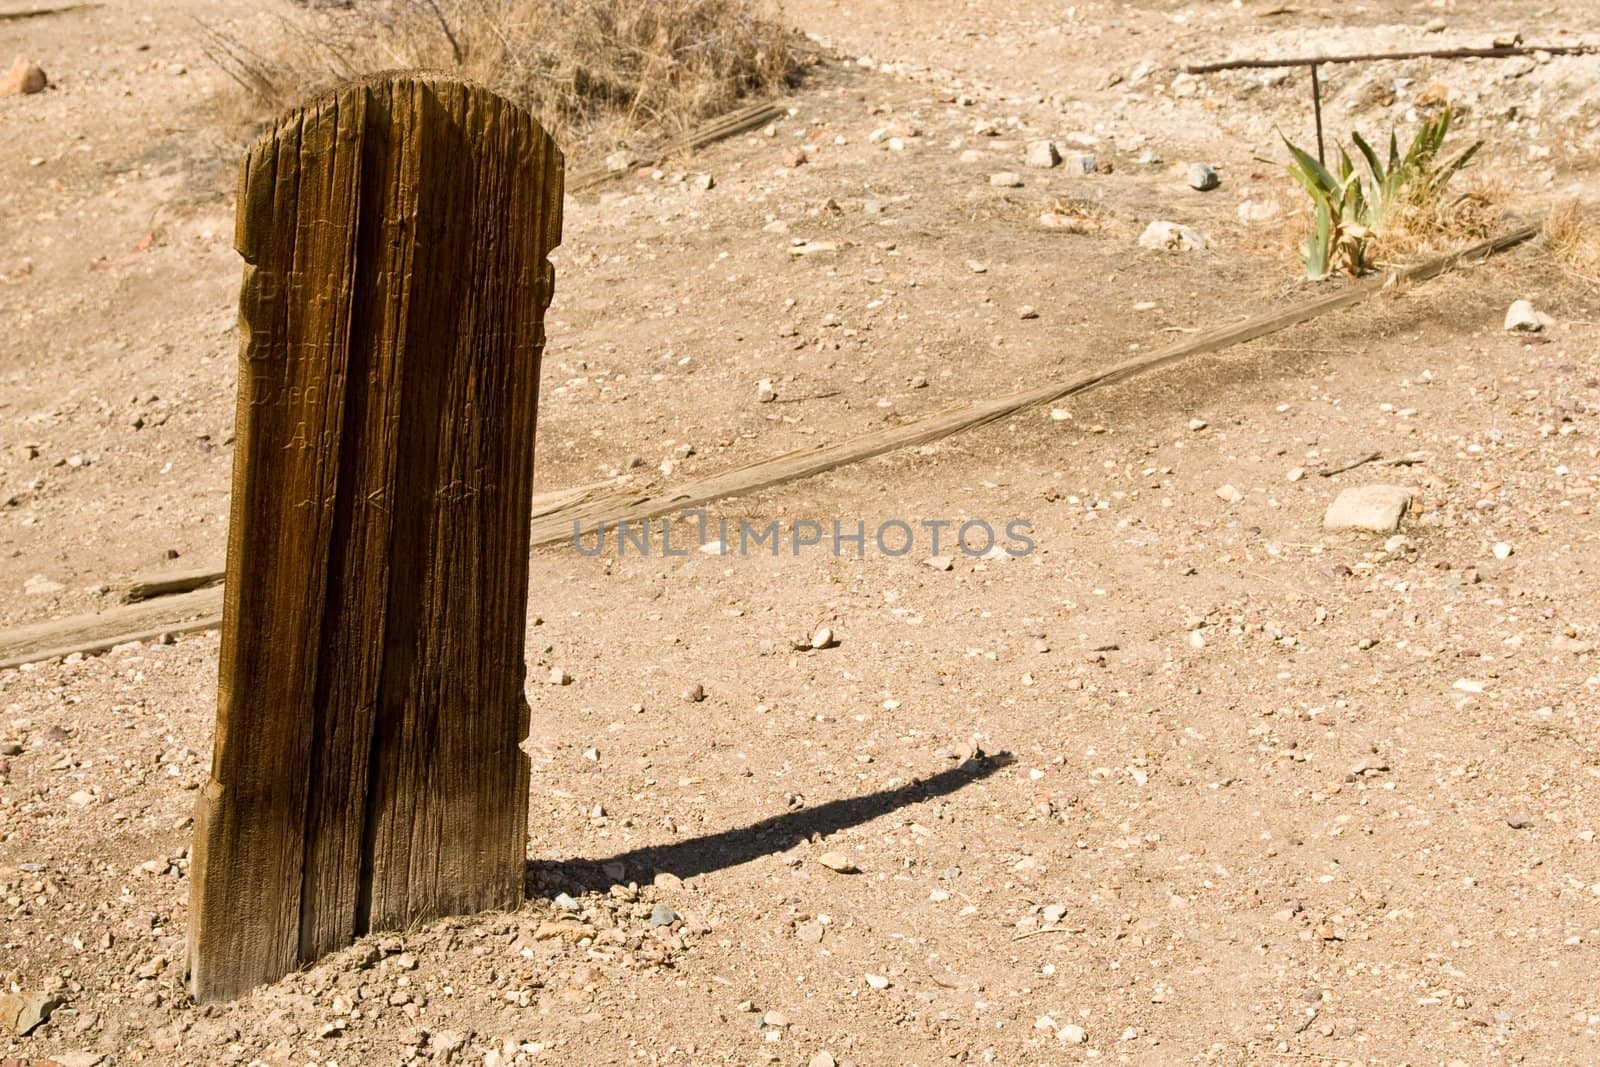 Desert graveyard scene of very worn wooden plank casting a long shadow on dirt